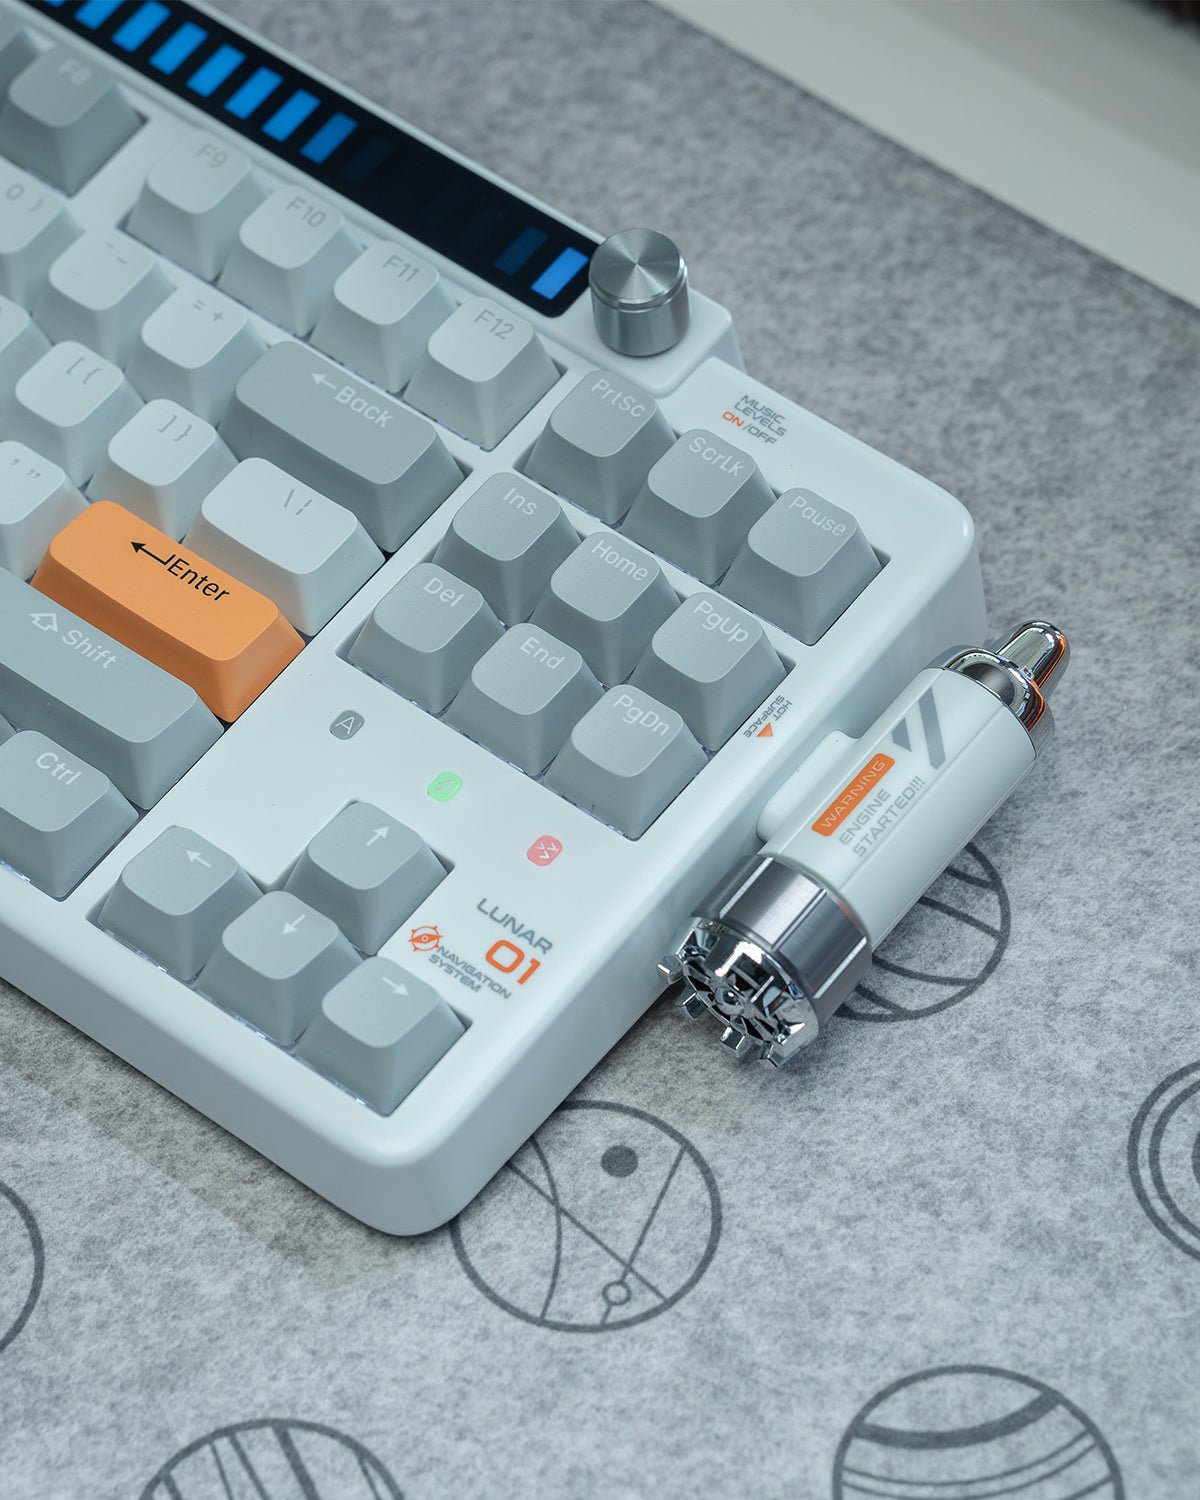 Mechanical Keyboard with Luminous Keys